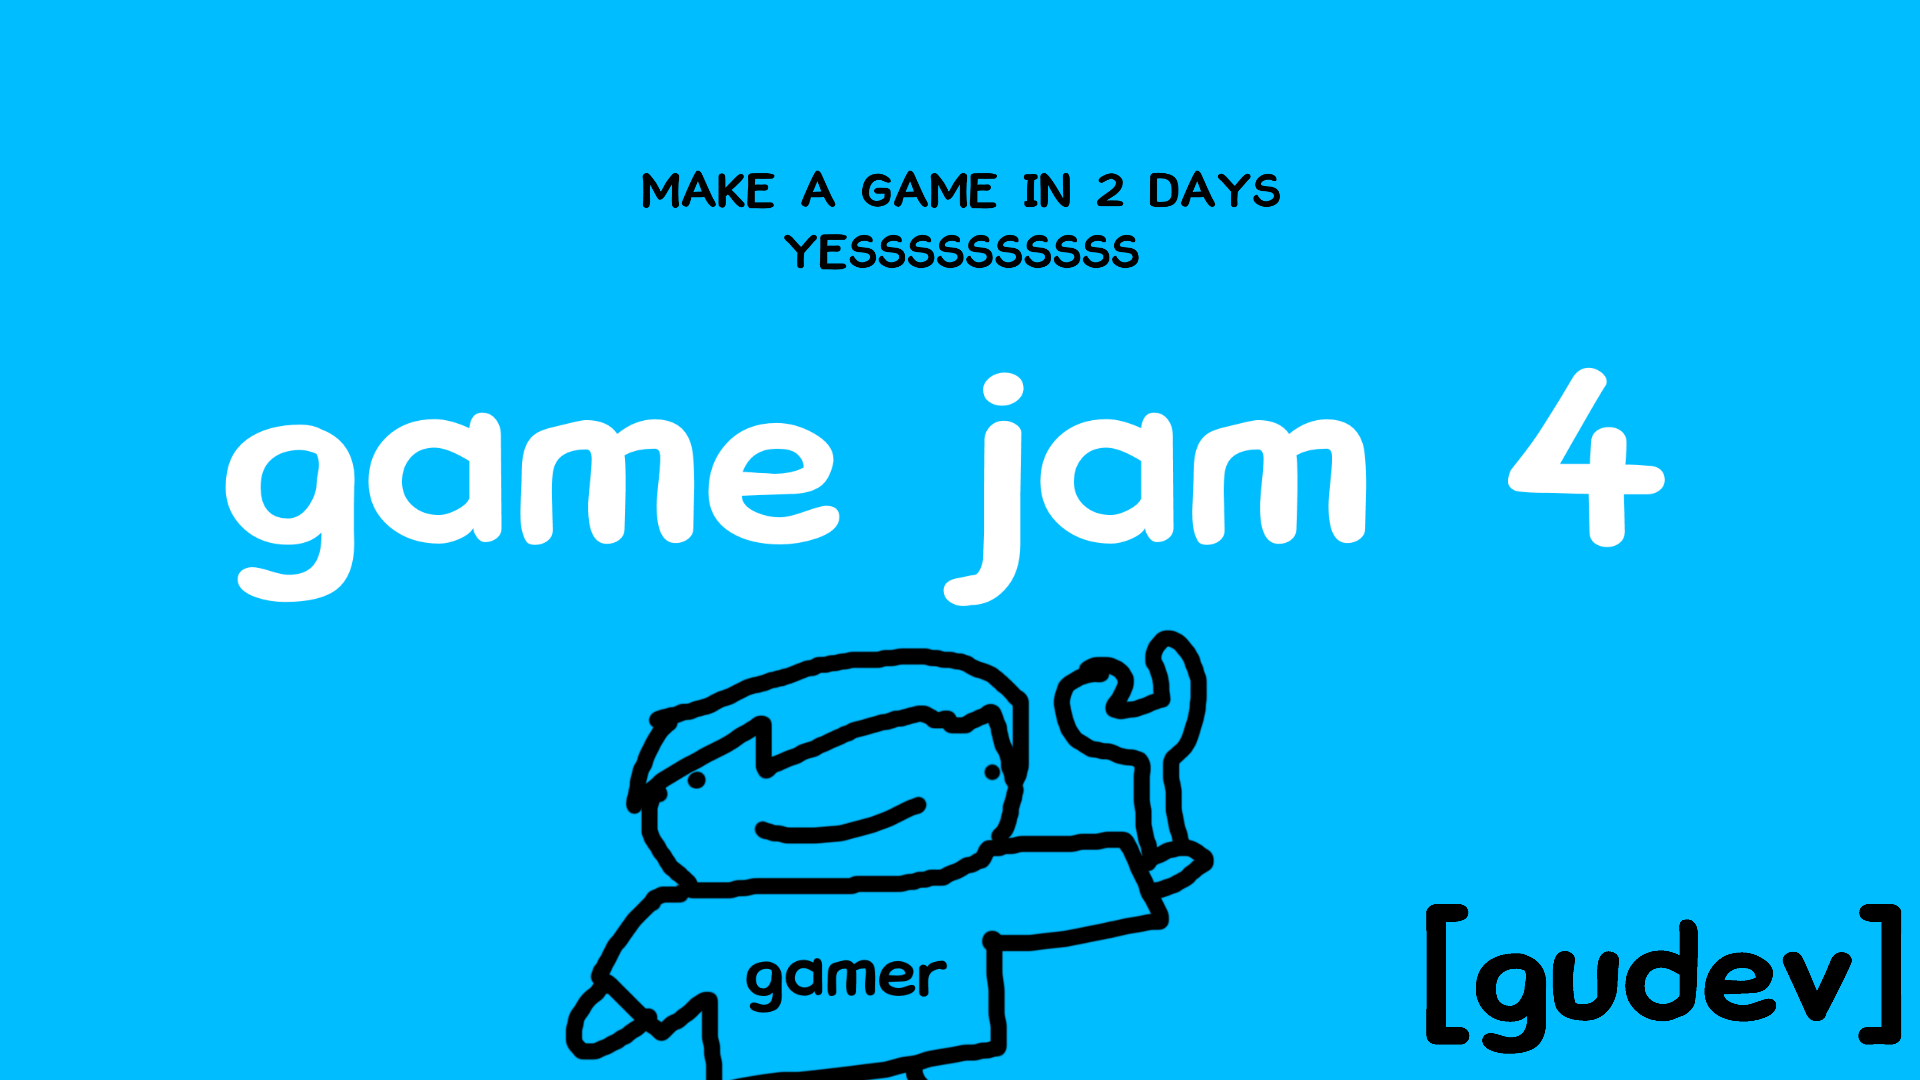 GameJam Logo